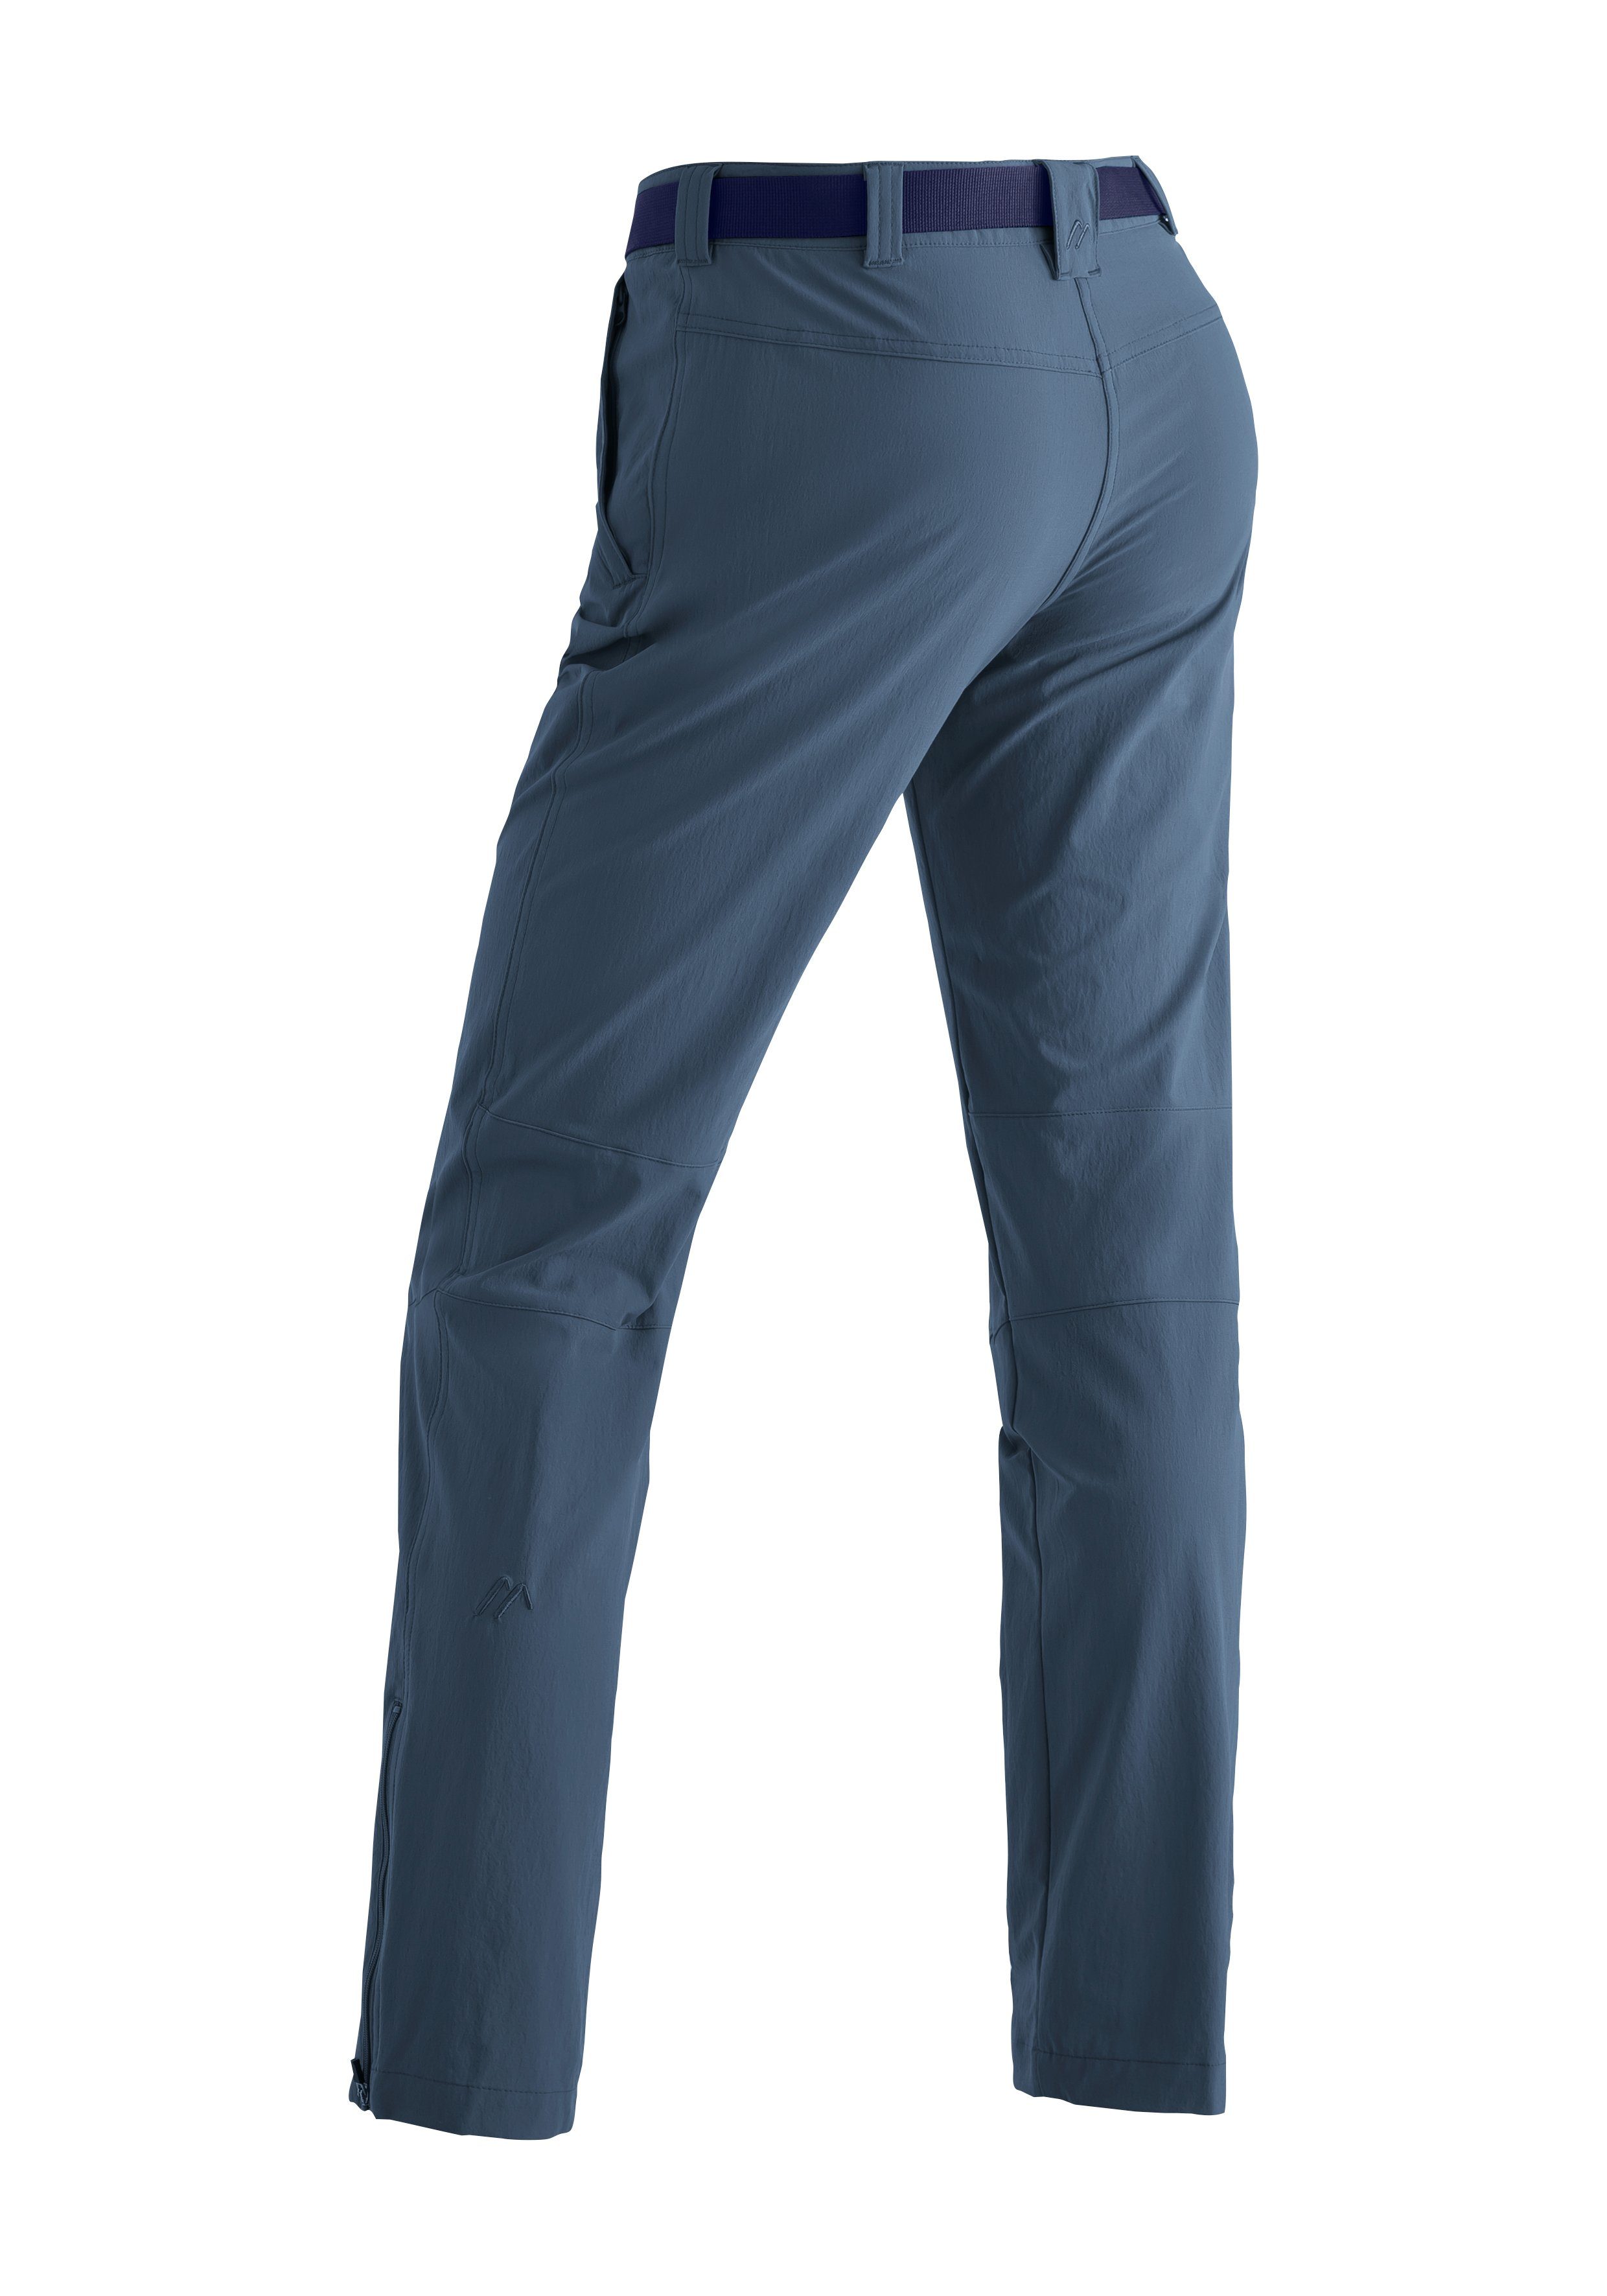 Damen Outdoor-Hose Inara Material elastischem jeansblau aus Maier slim Funktionshose Sports Wanderhose,